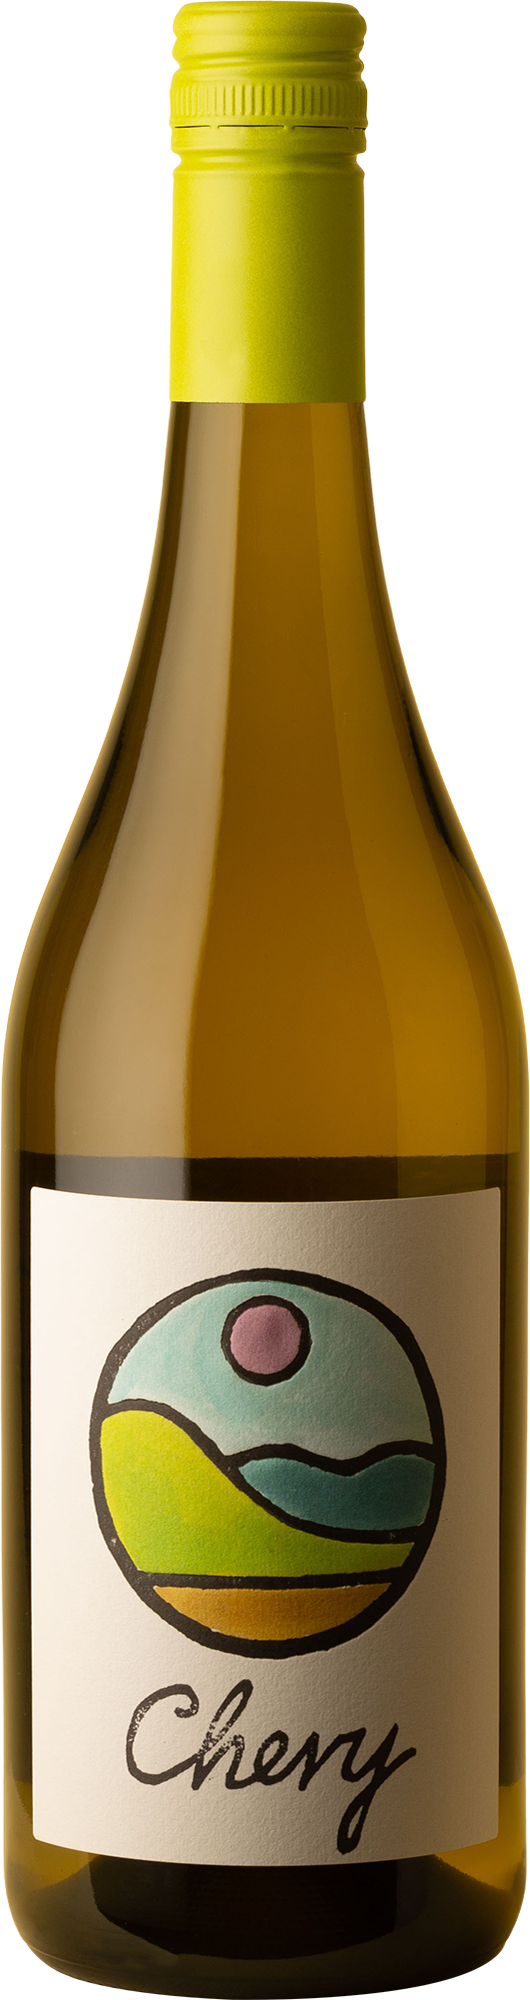 Les Fruits - Chevy Chardonnay / Sauvignon Blanc 2021 White Wine